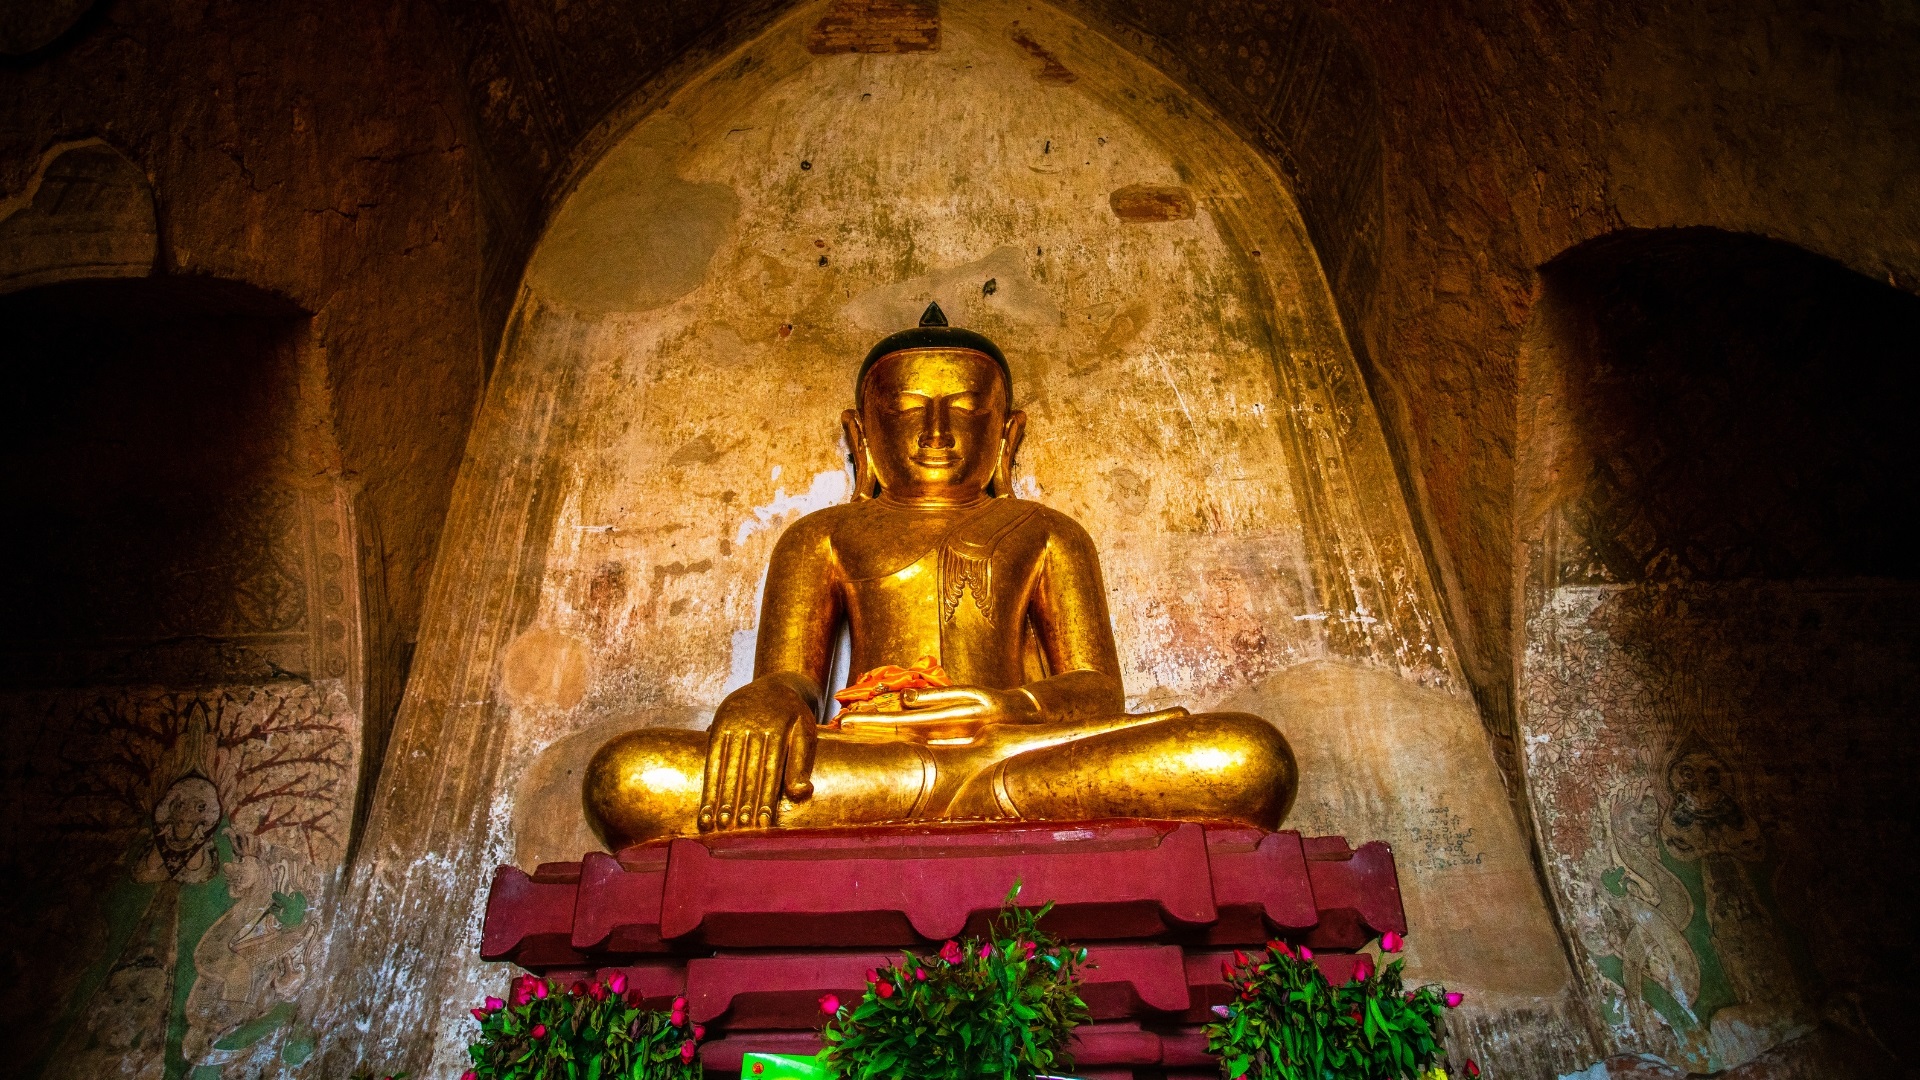 Buddha image inside the temple